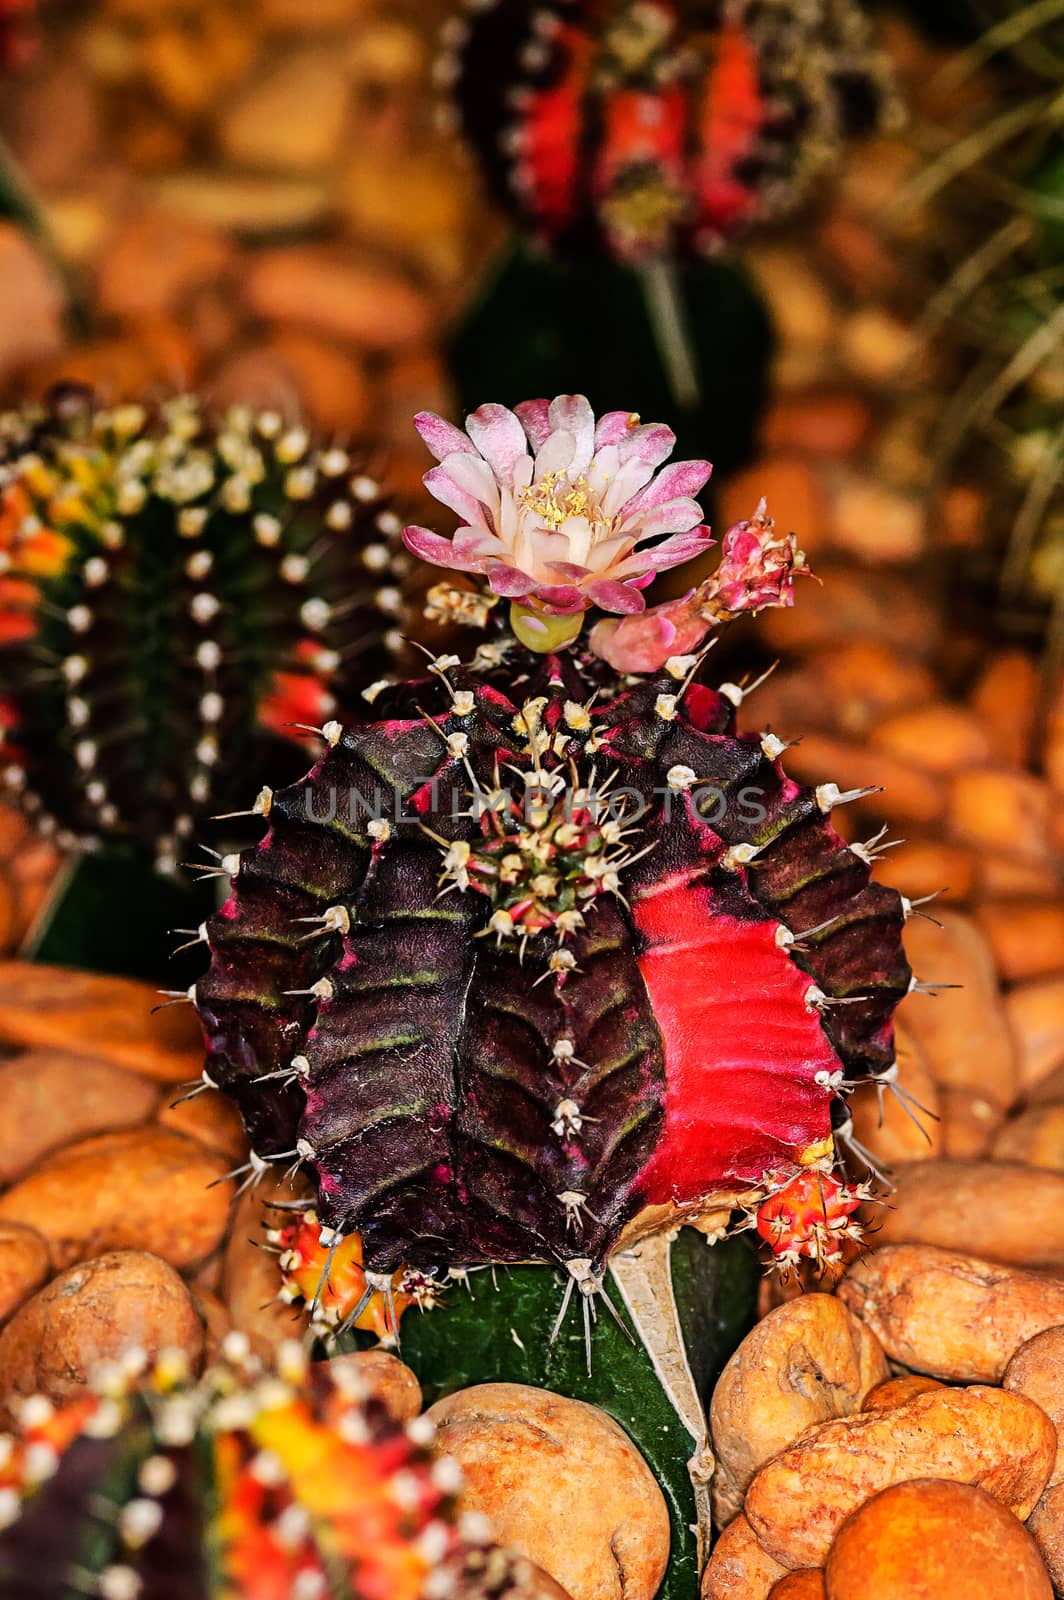 Blossom of a cactus background stone